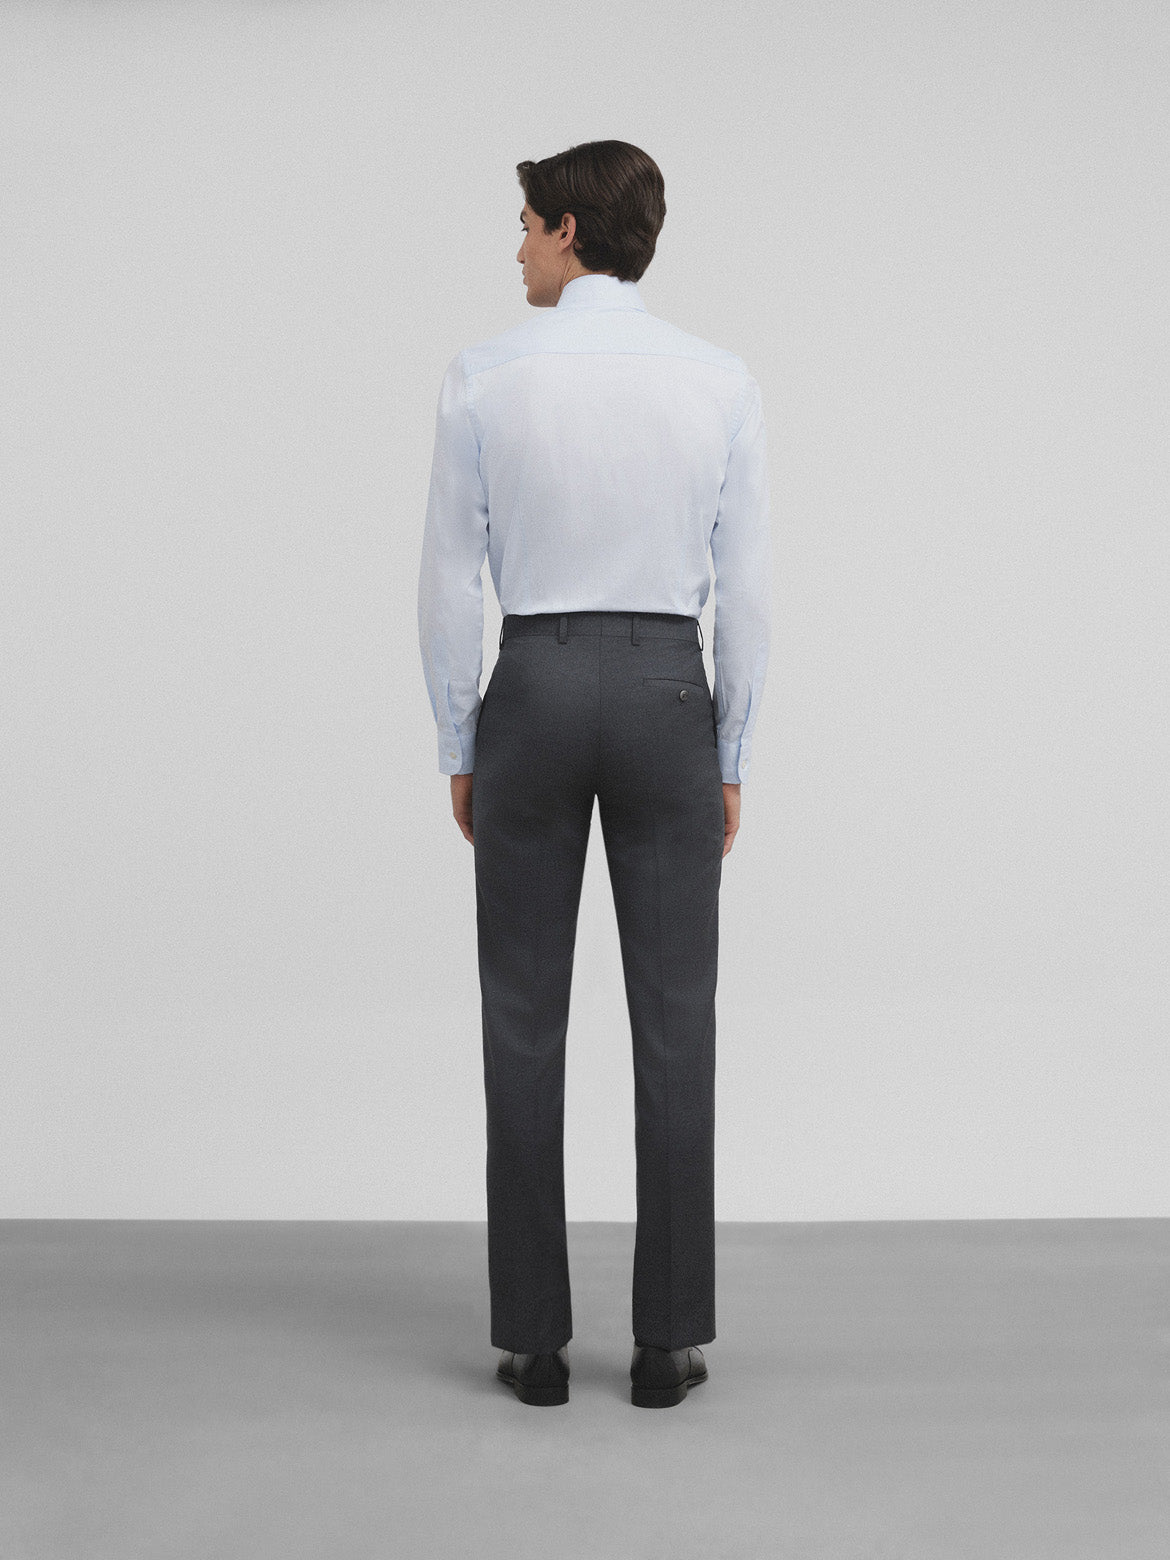 Classic gray herringbone suit pants